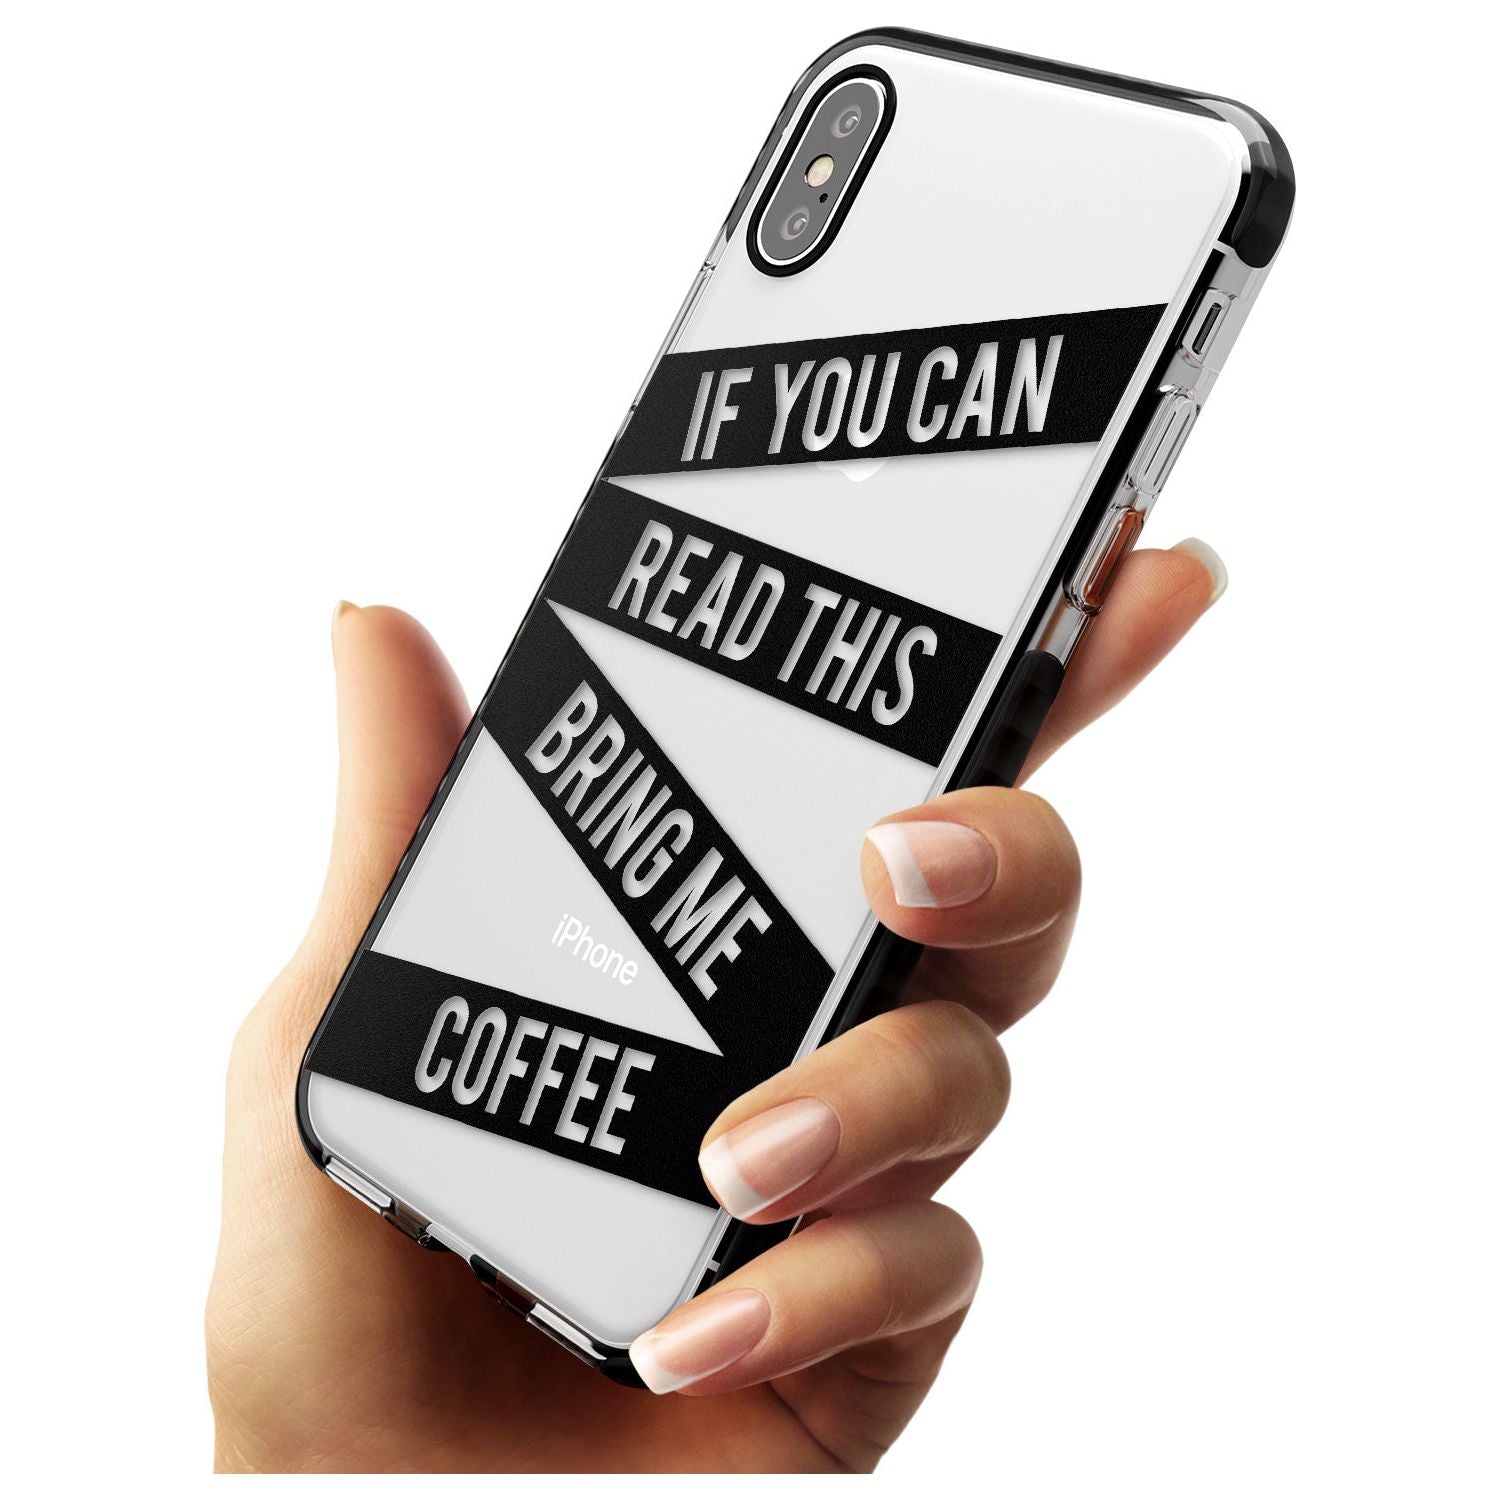 Black Stripes Bring Me Coffee Black Impact Phone Case for iPhone X XS Max XR